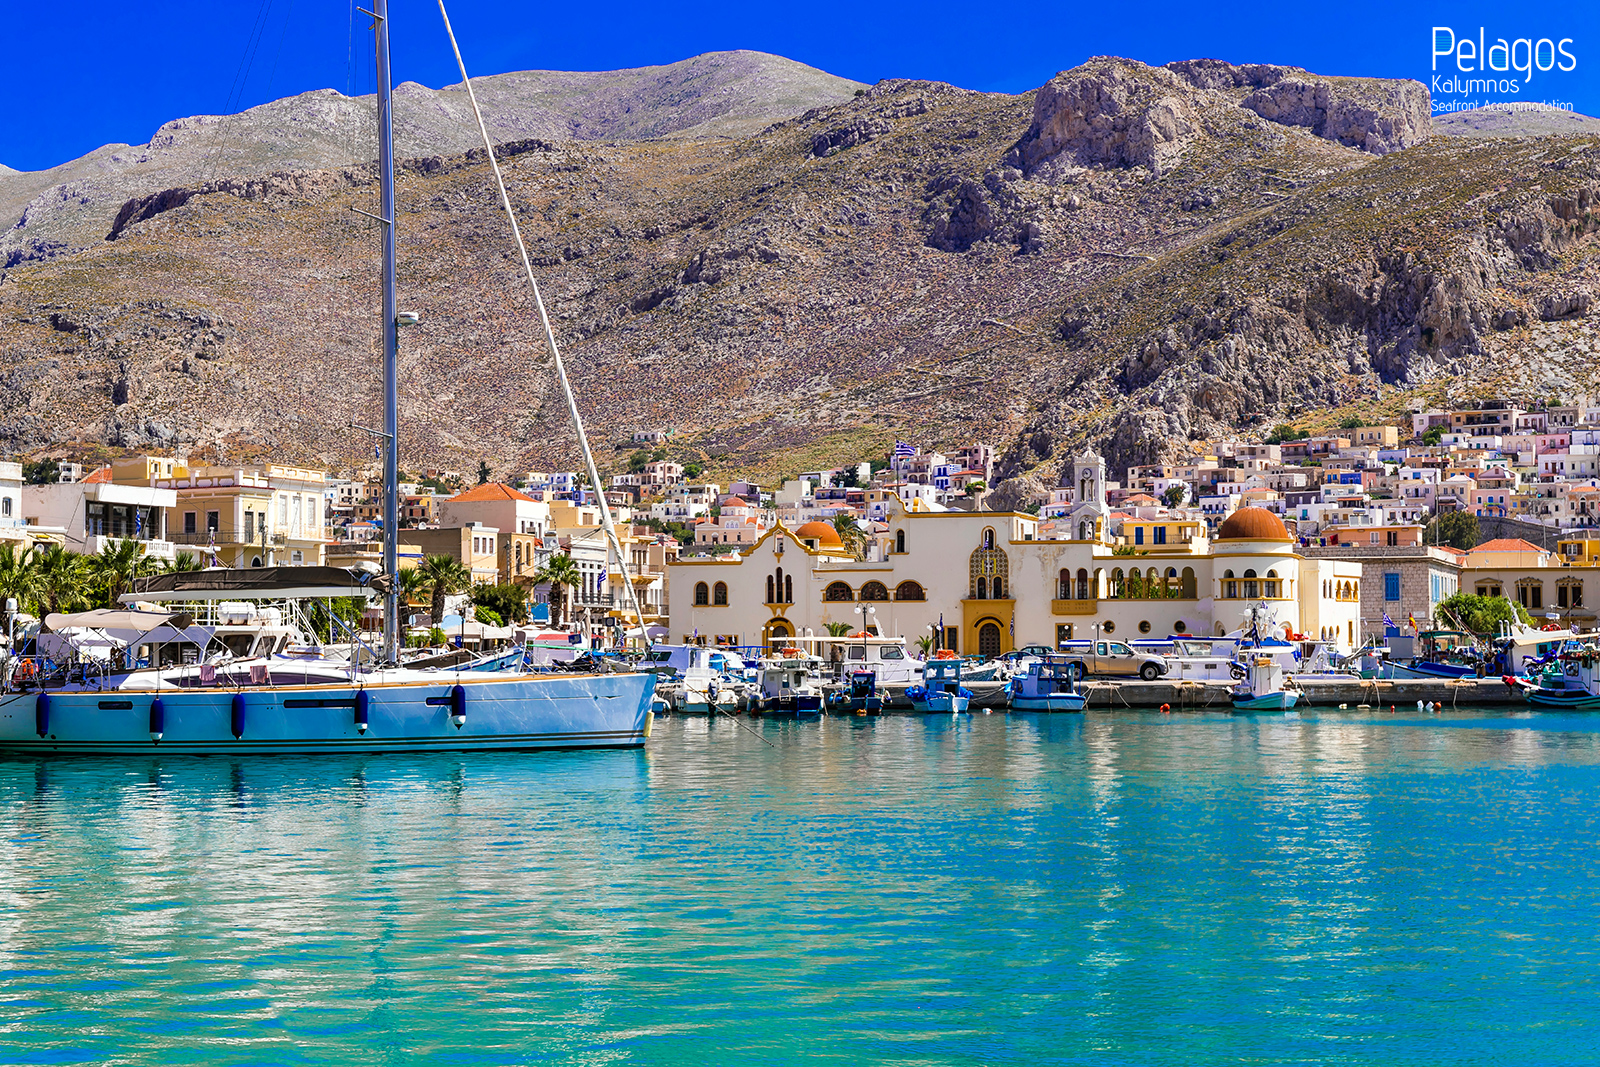 Pelagos – Seafront Accommodation Kalymnos Greece